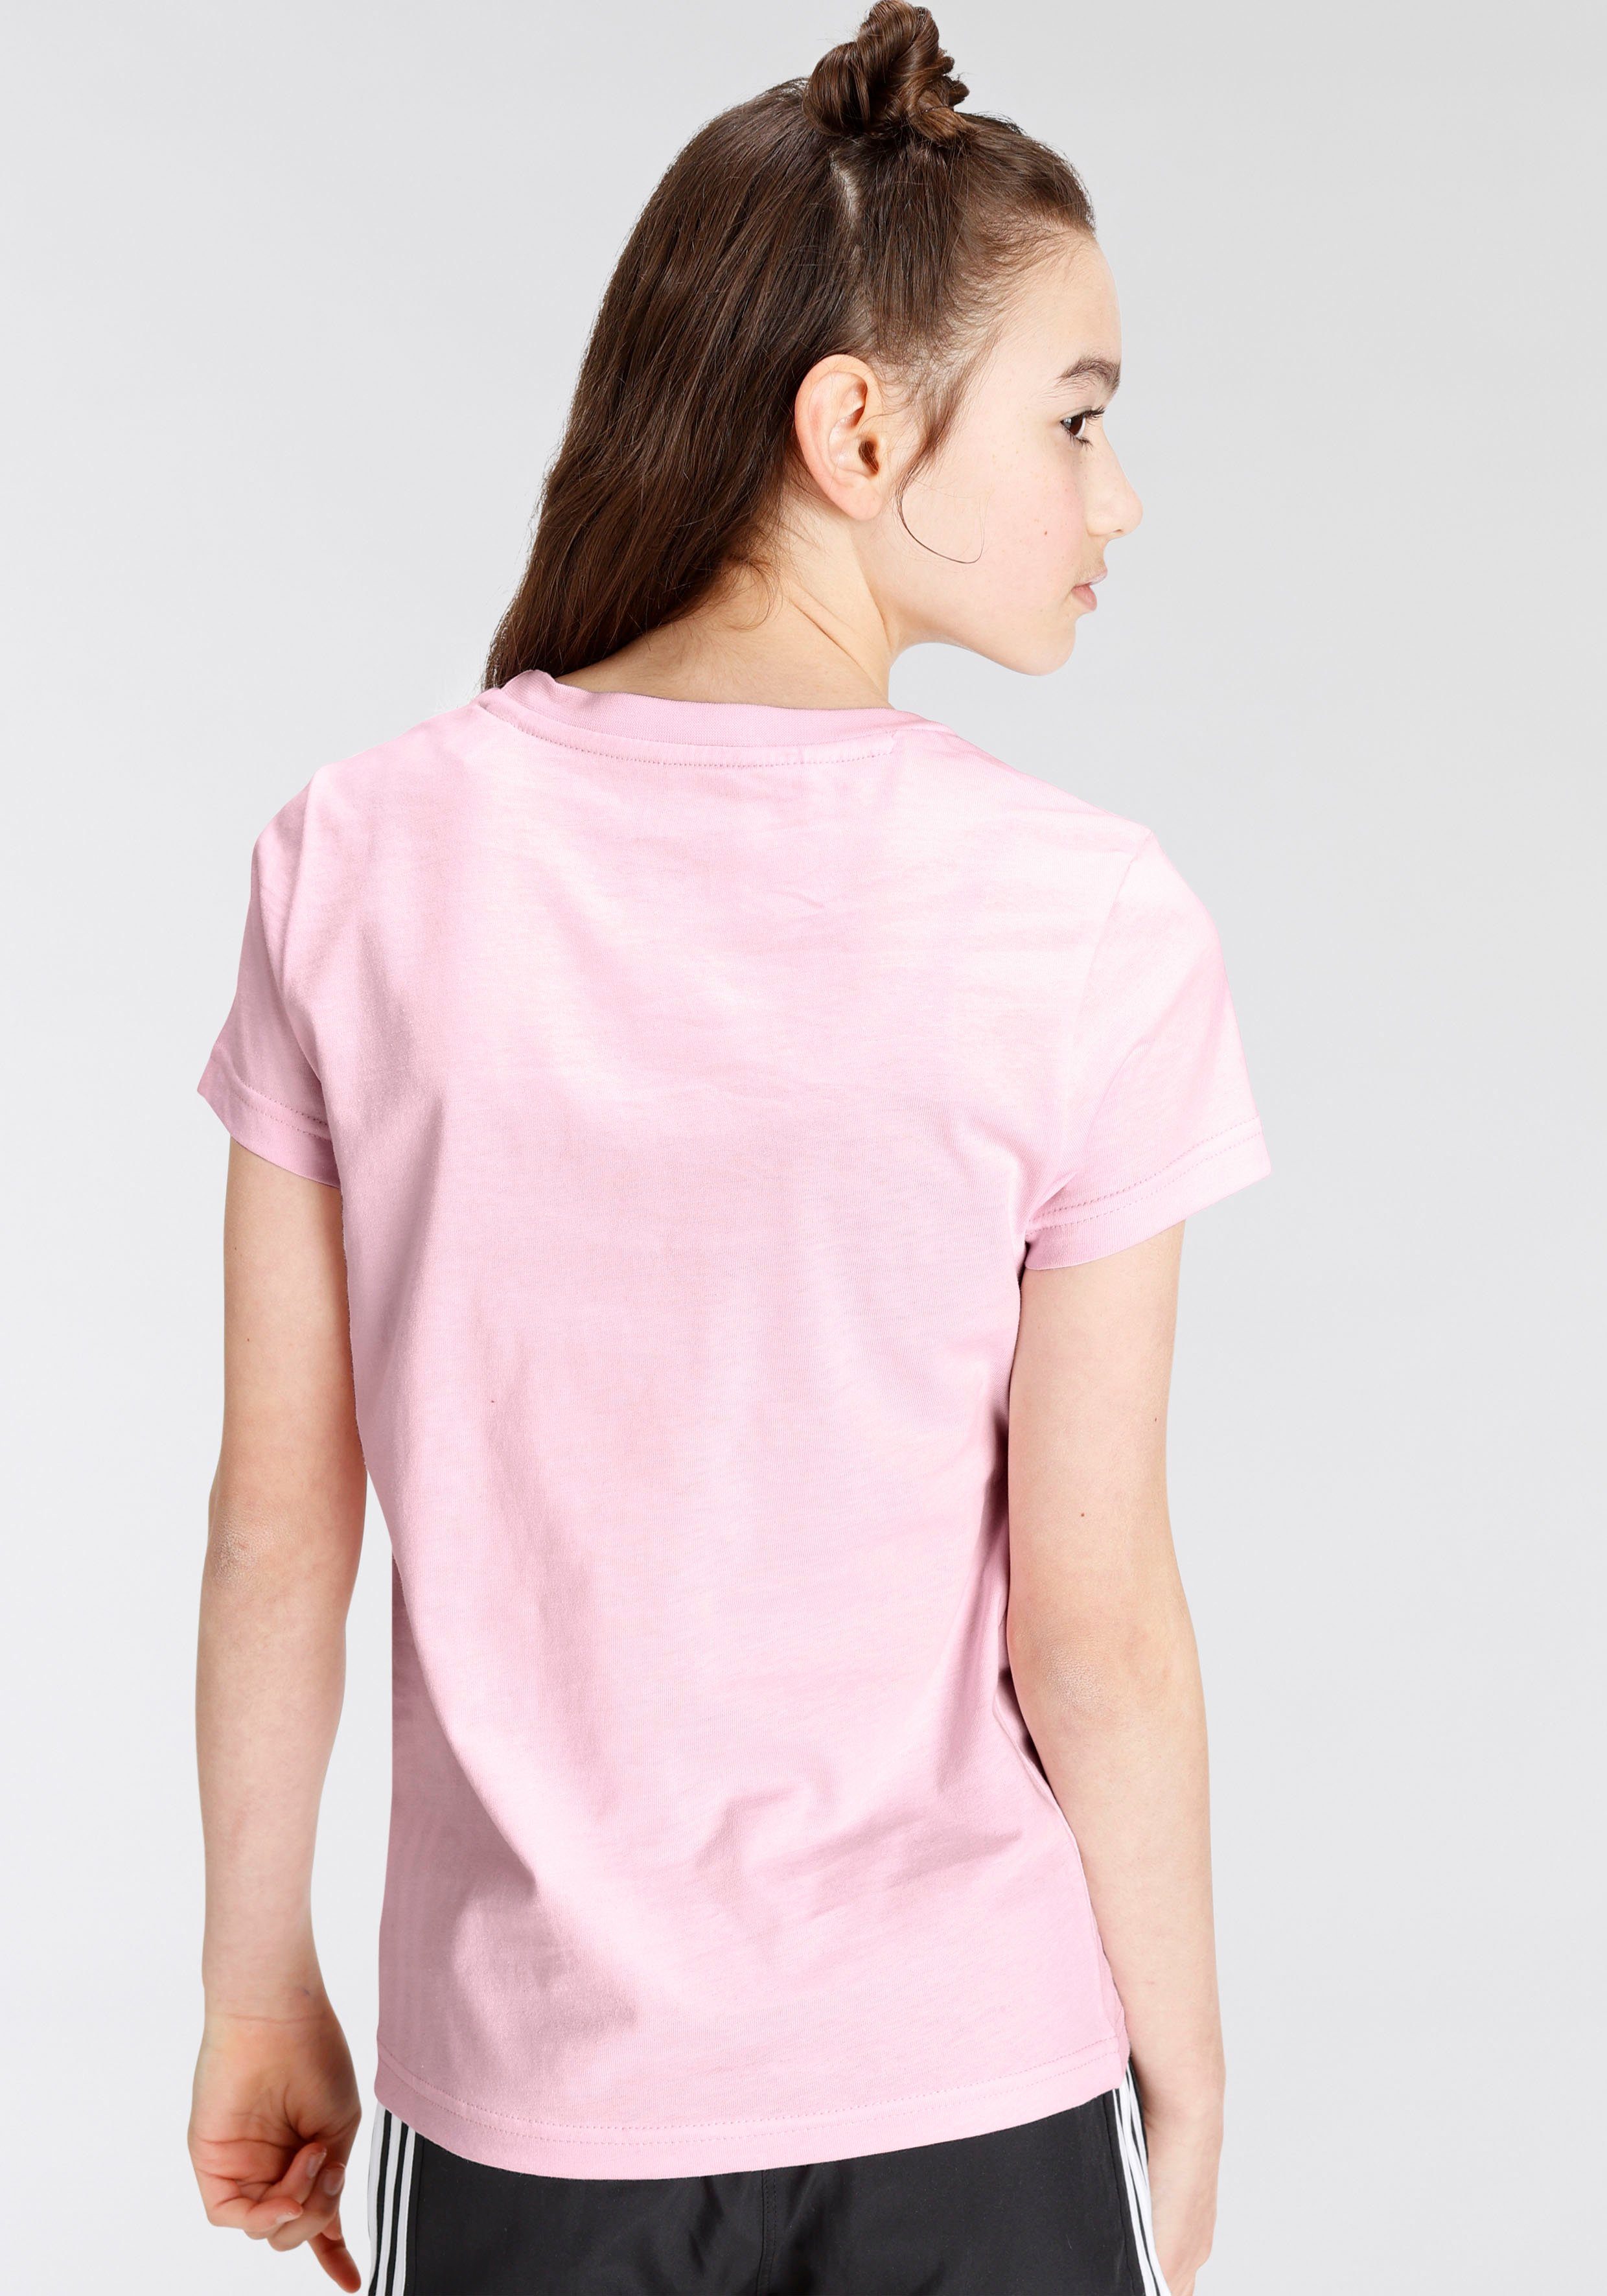 ESSENTIALS BIG LOGO Pink Sportswear / White COTTON T-Shirt Clear adidas